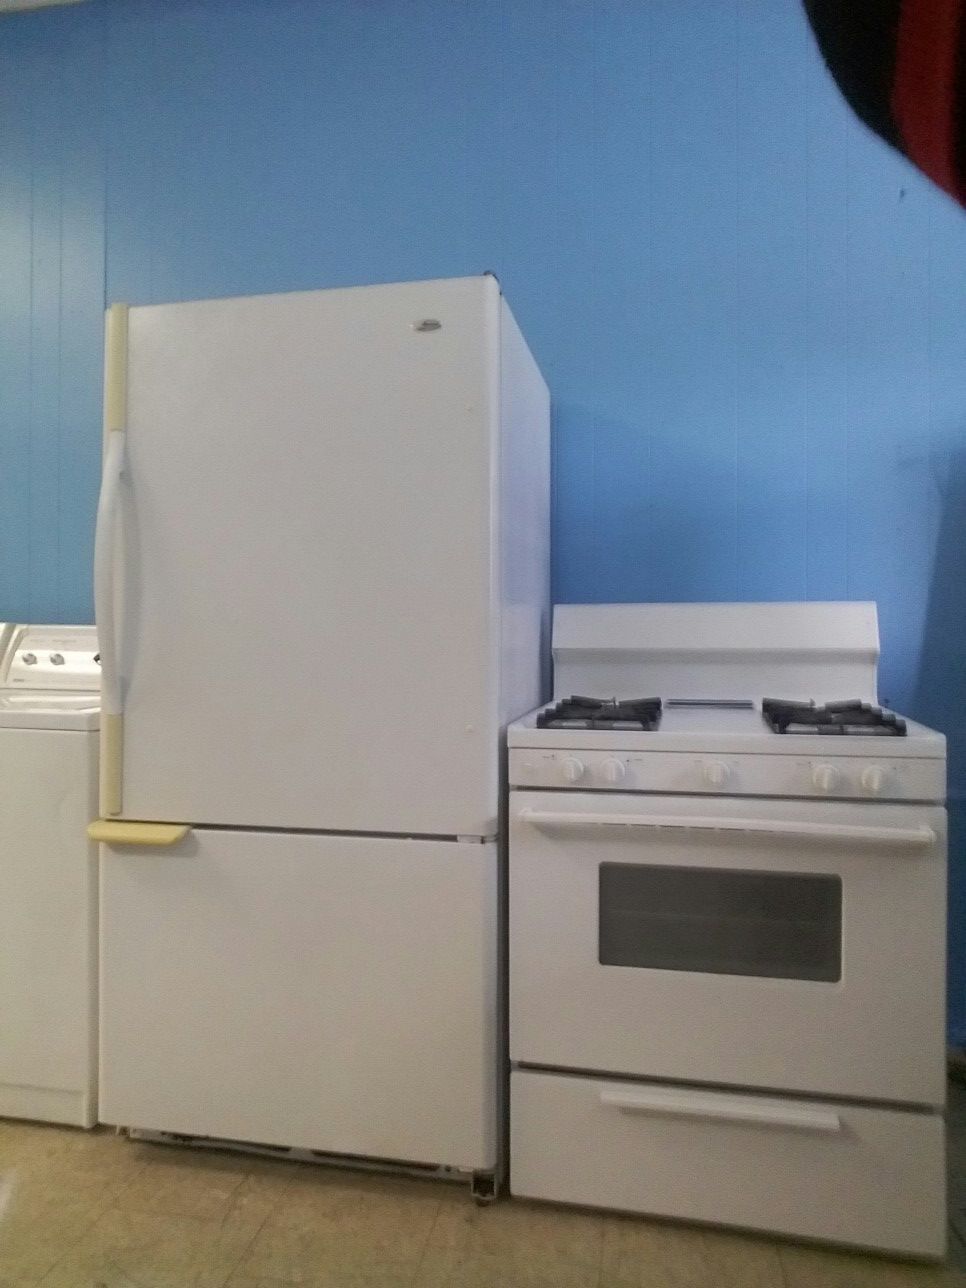 refrigerator stove white